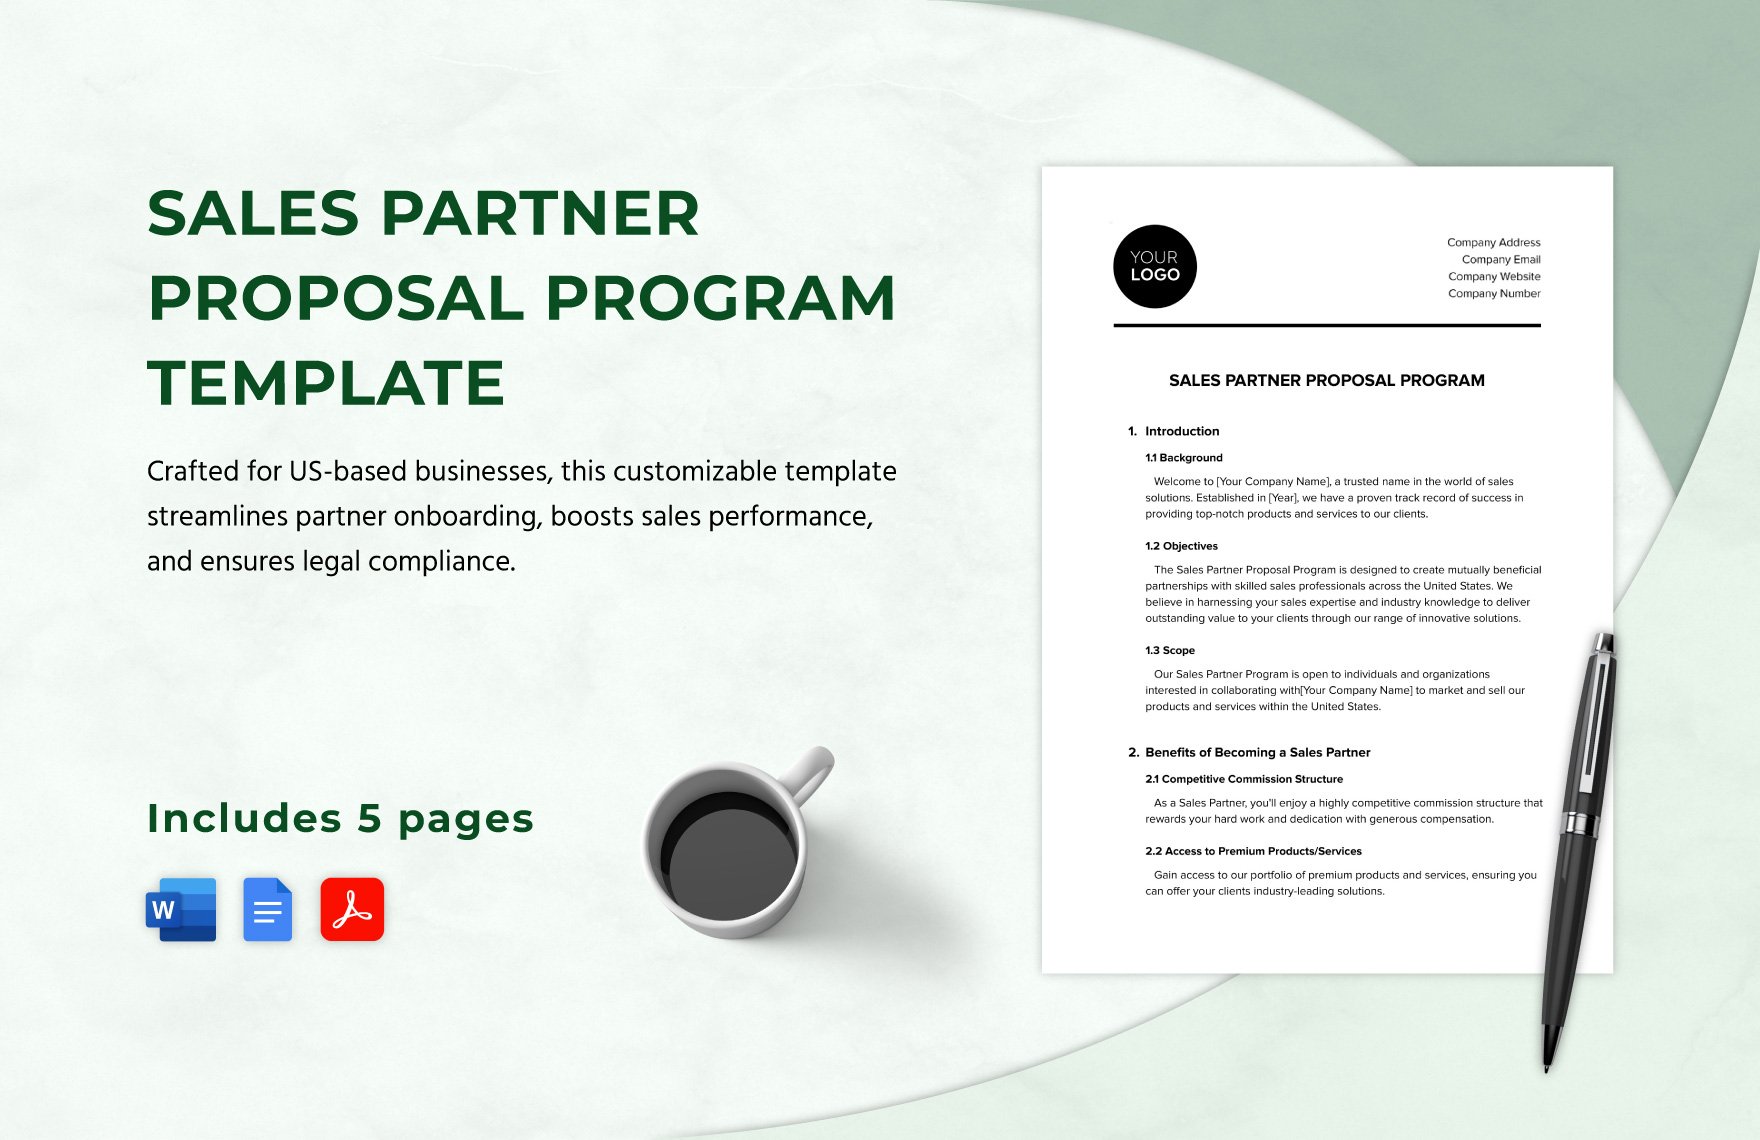 Sales Partner Proposal Program Template in Word, Google Docs, PDF